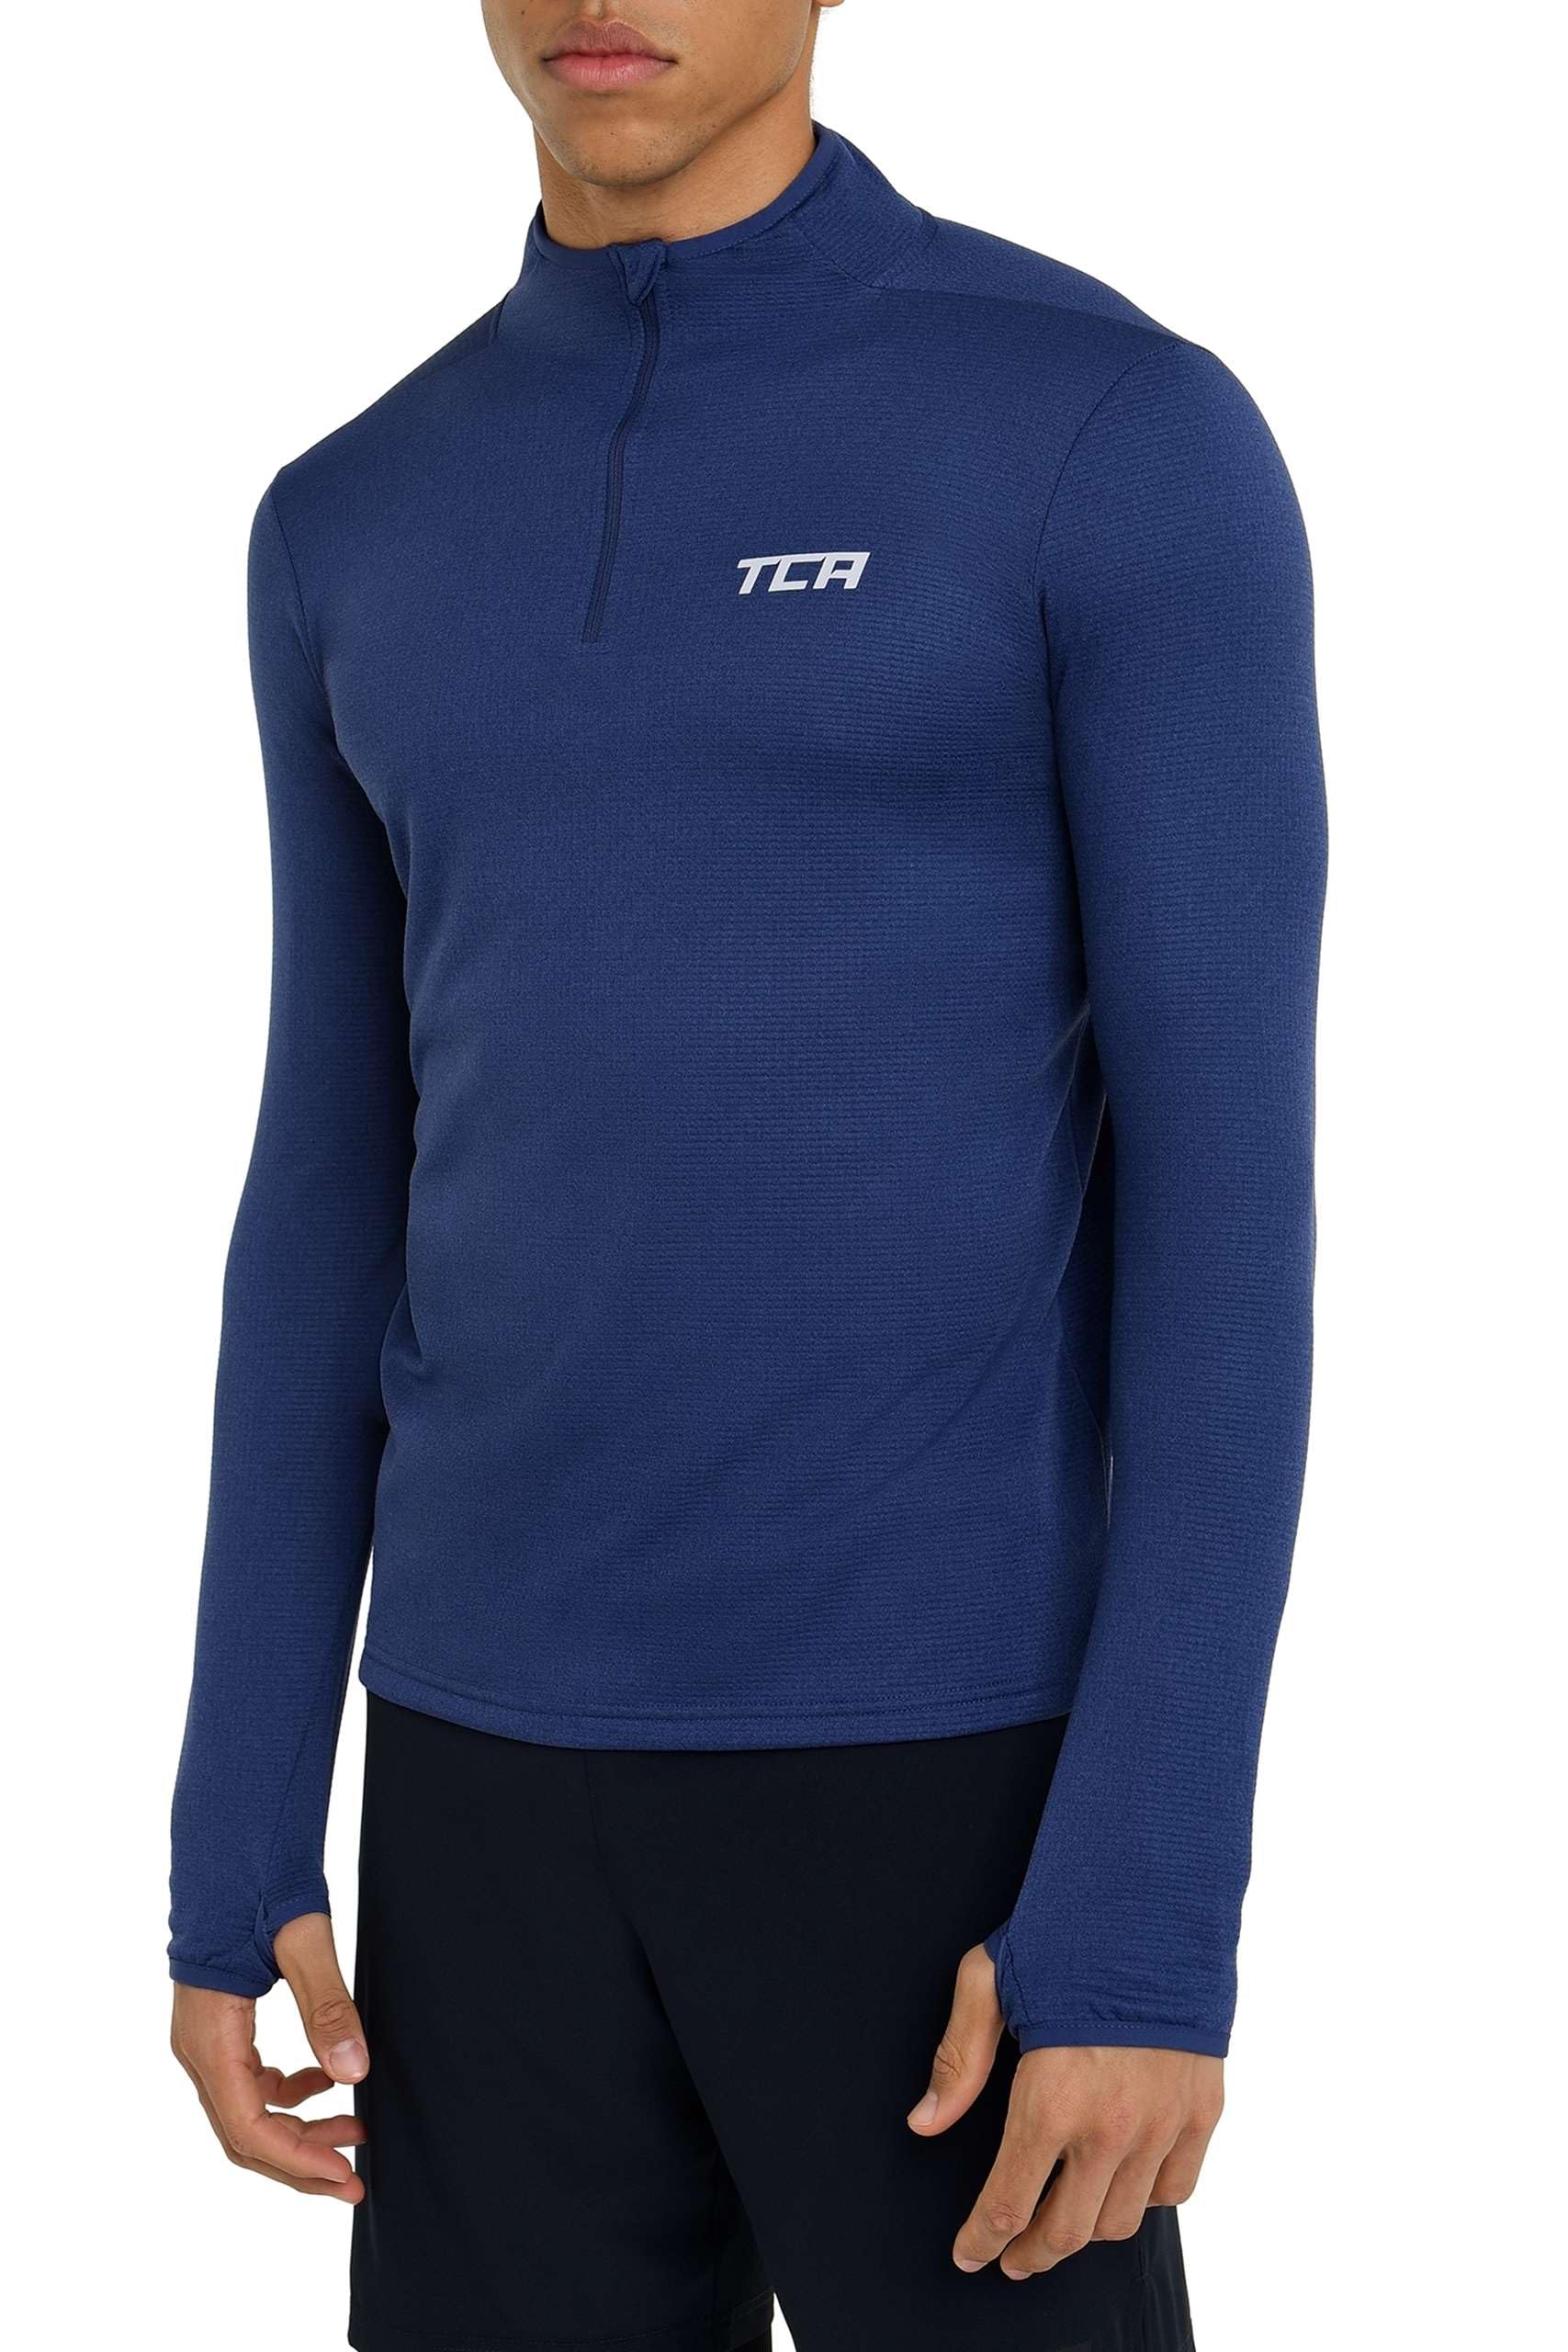 TCA Herren Cloud Fleece mit Brust Reißveschluss - Thermo Sporttop Laufshirt - Dunkelblau, XL